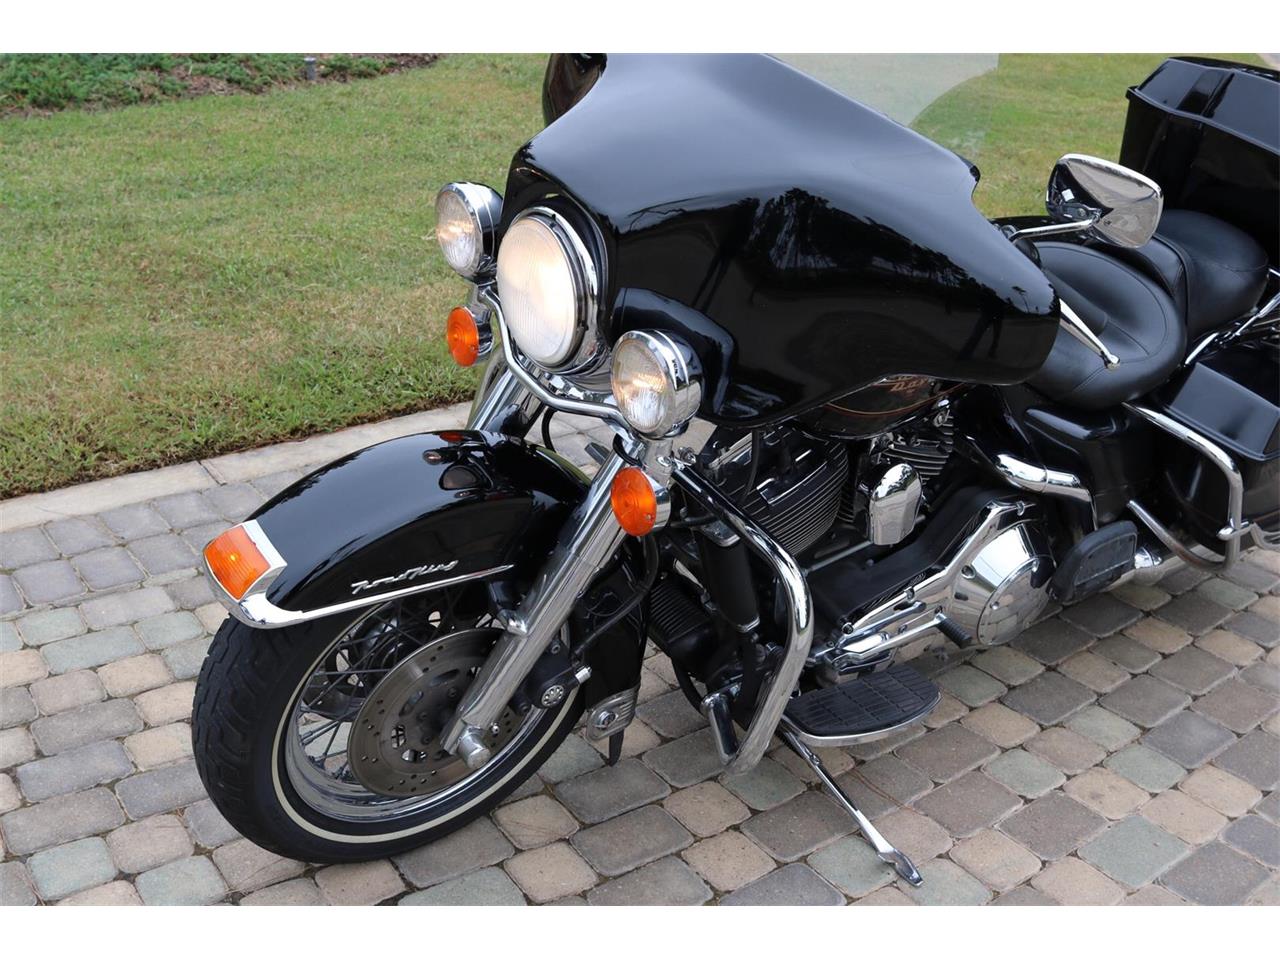 1999 Harley-Davidson Road King for Sale | ClassicCars.com | CC-1158837